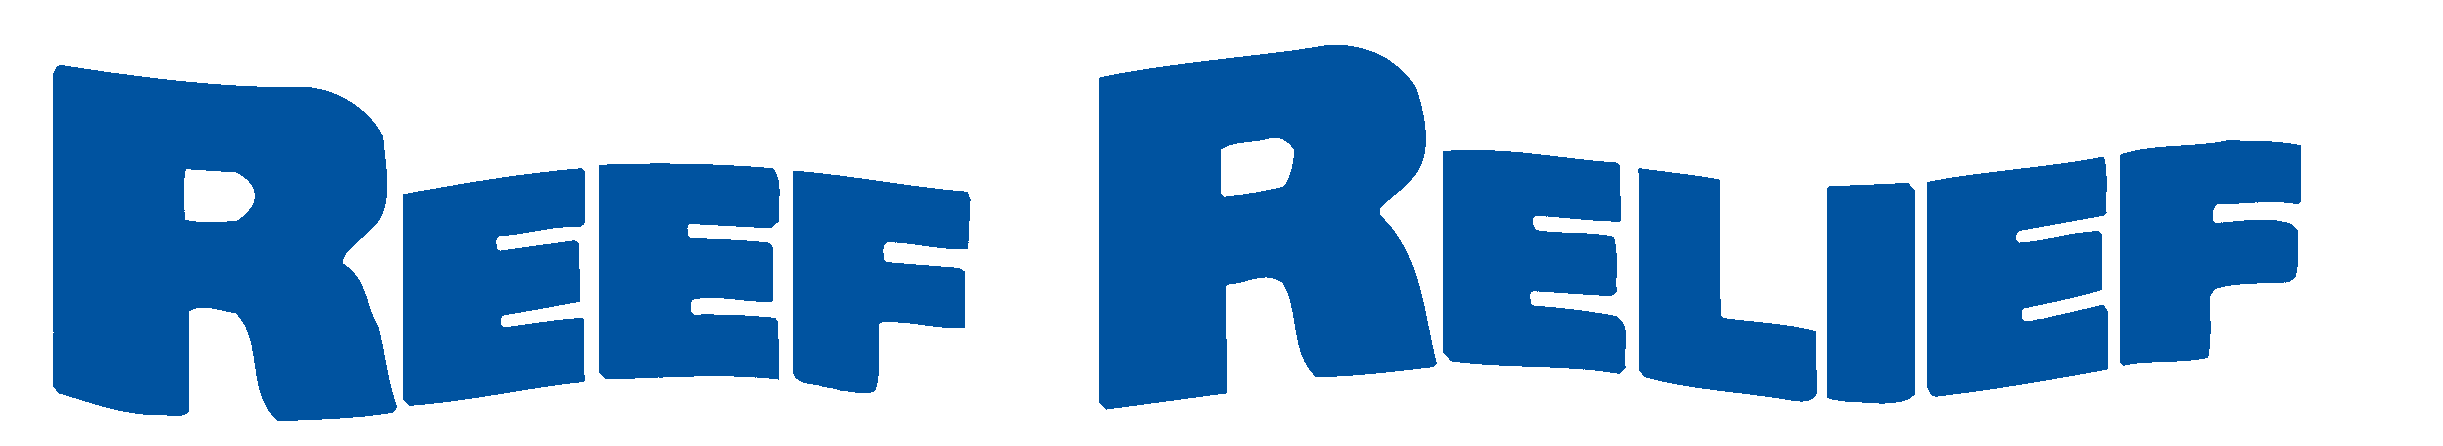 Reef Relief Logo